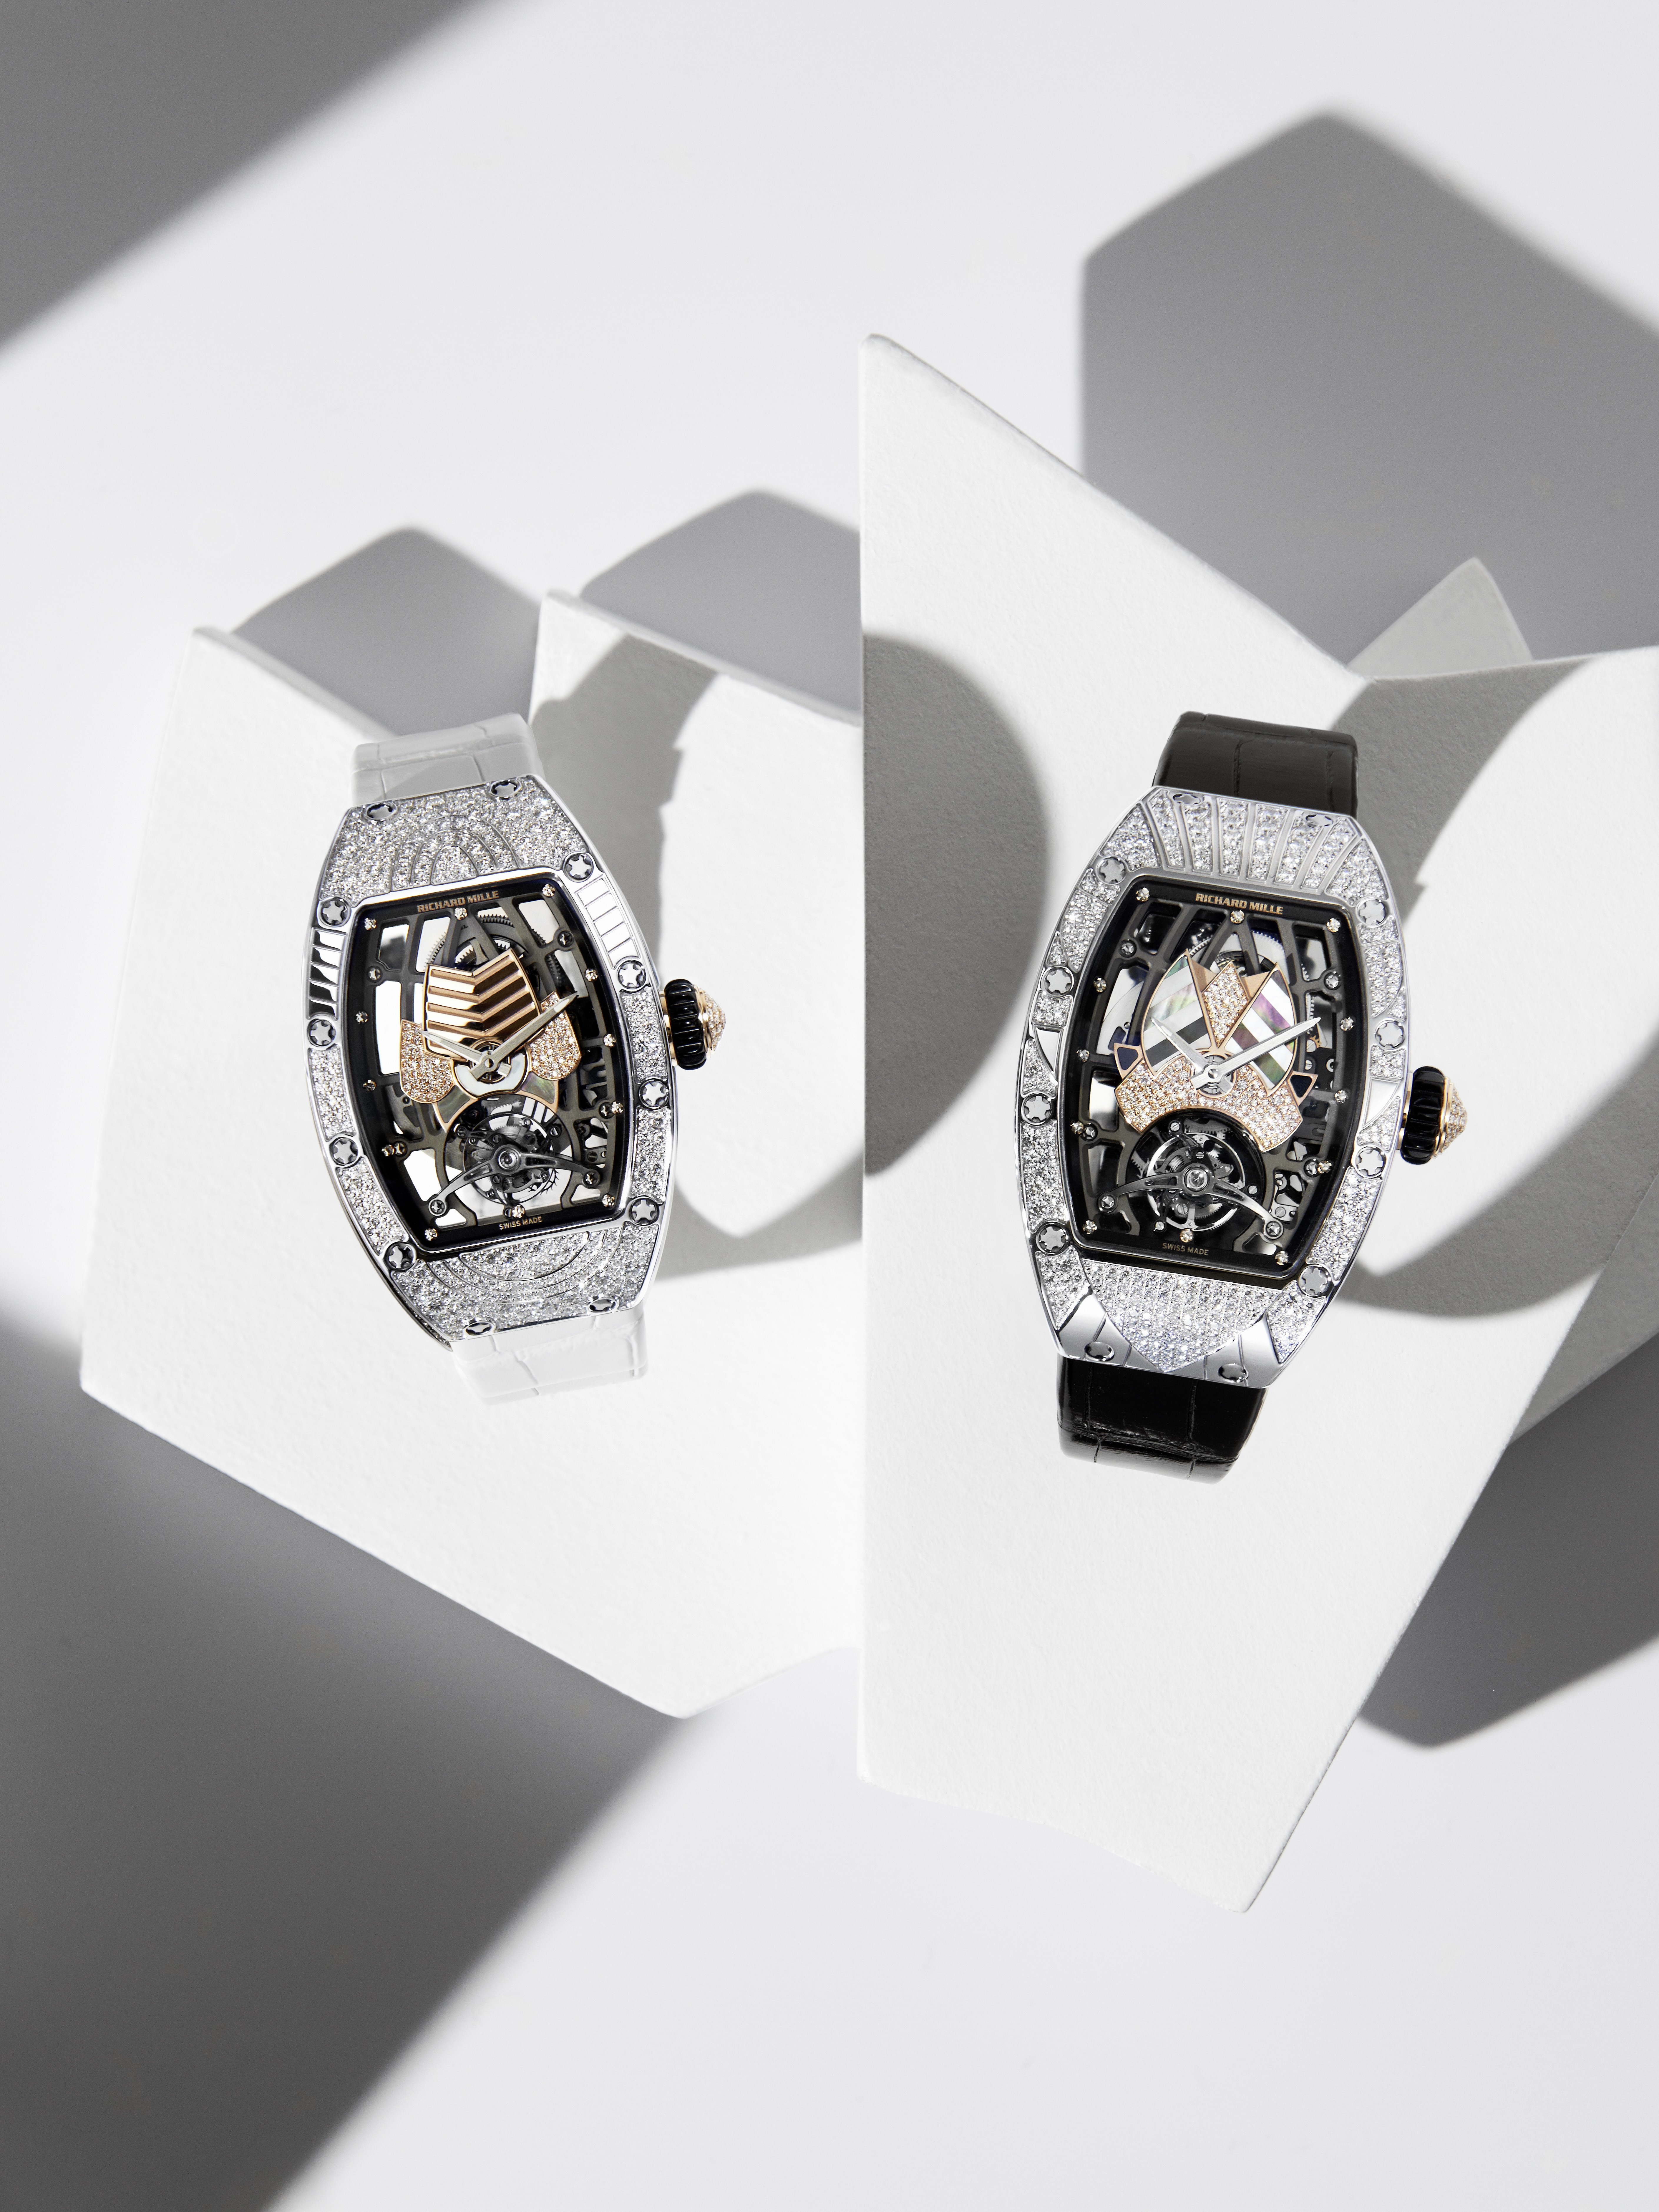 Richard Mille created 10 different variations of its art deco-inspired ladies’ timepiece, the RM 71-01 Automatic Tourbillon Talisman. PhotoS: Manon Wertenbroek/Arnaud Le Brazidec